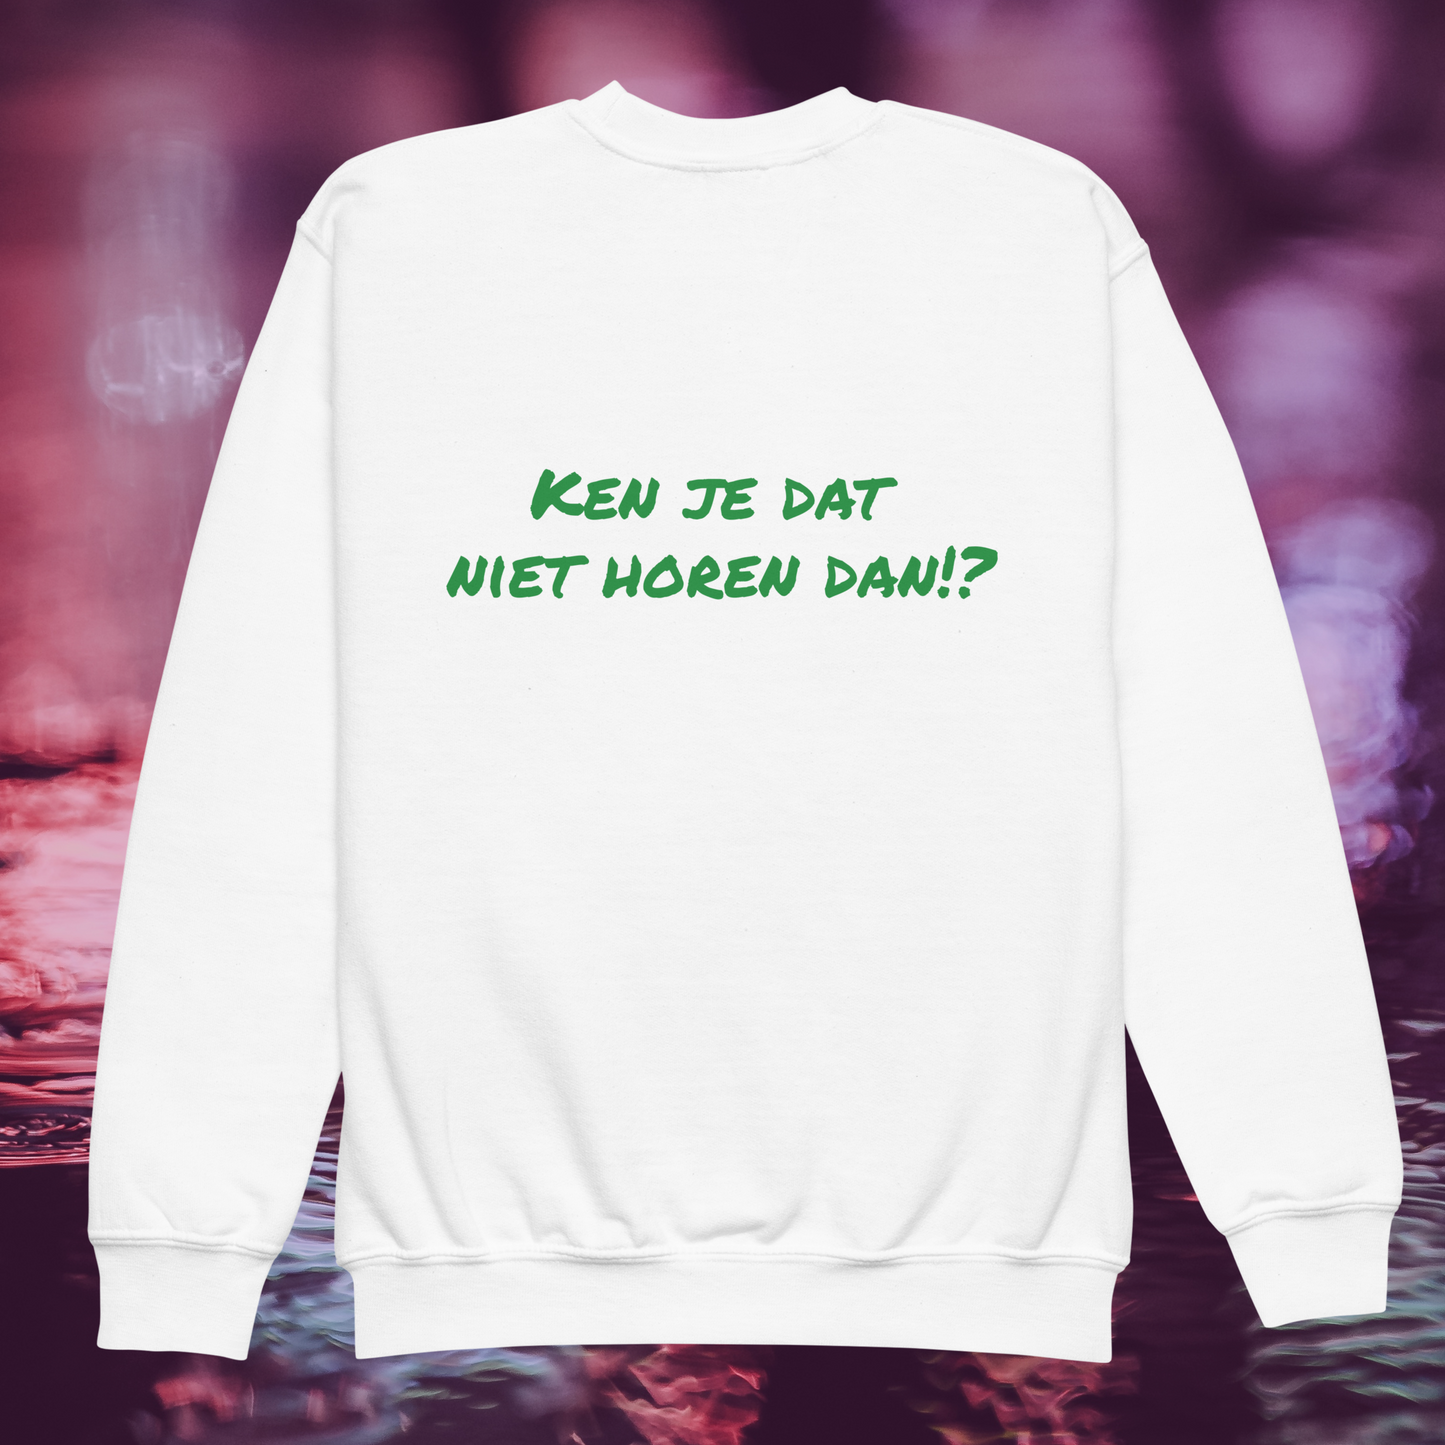 Rotterdam Unisex Jeugd crewneck sweatshirt